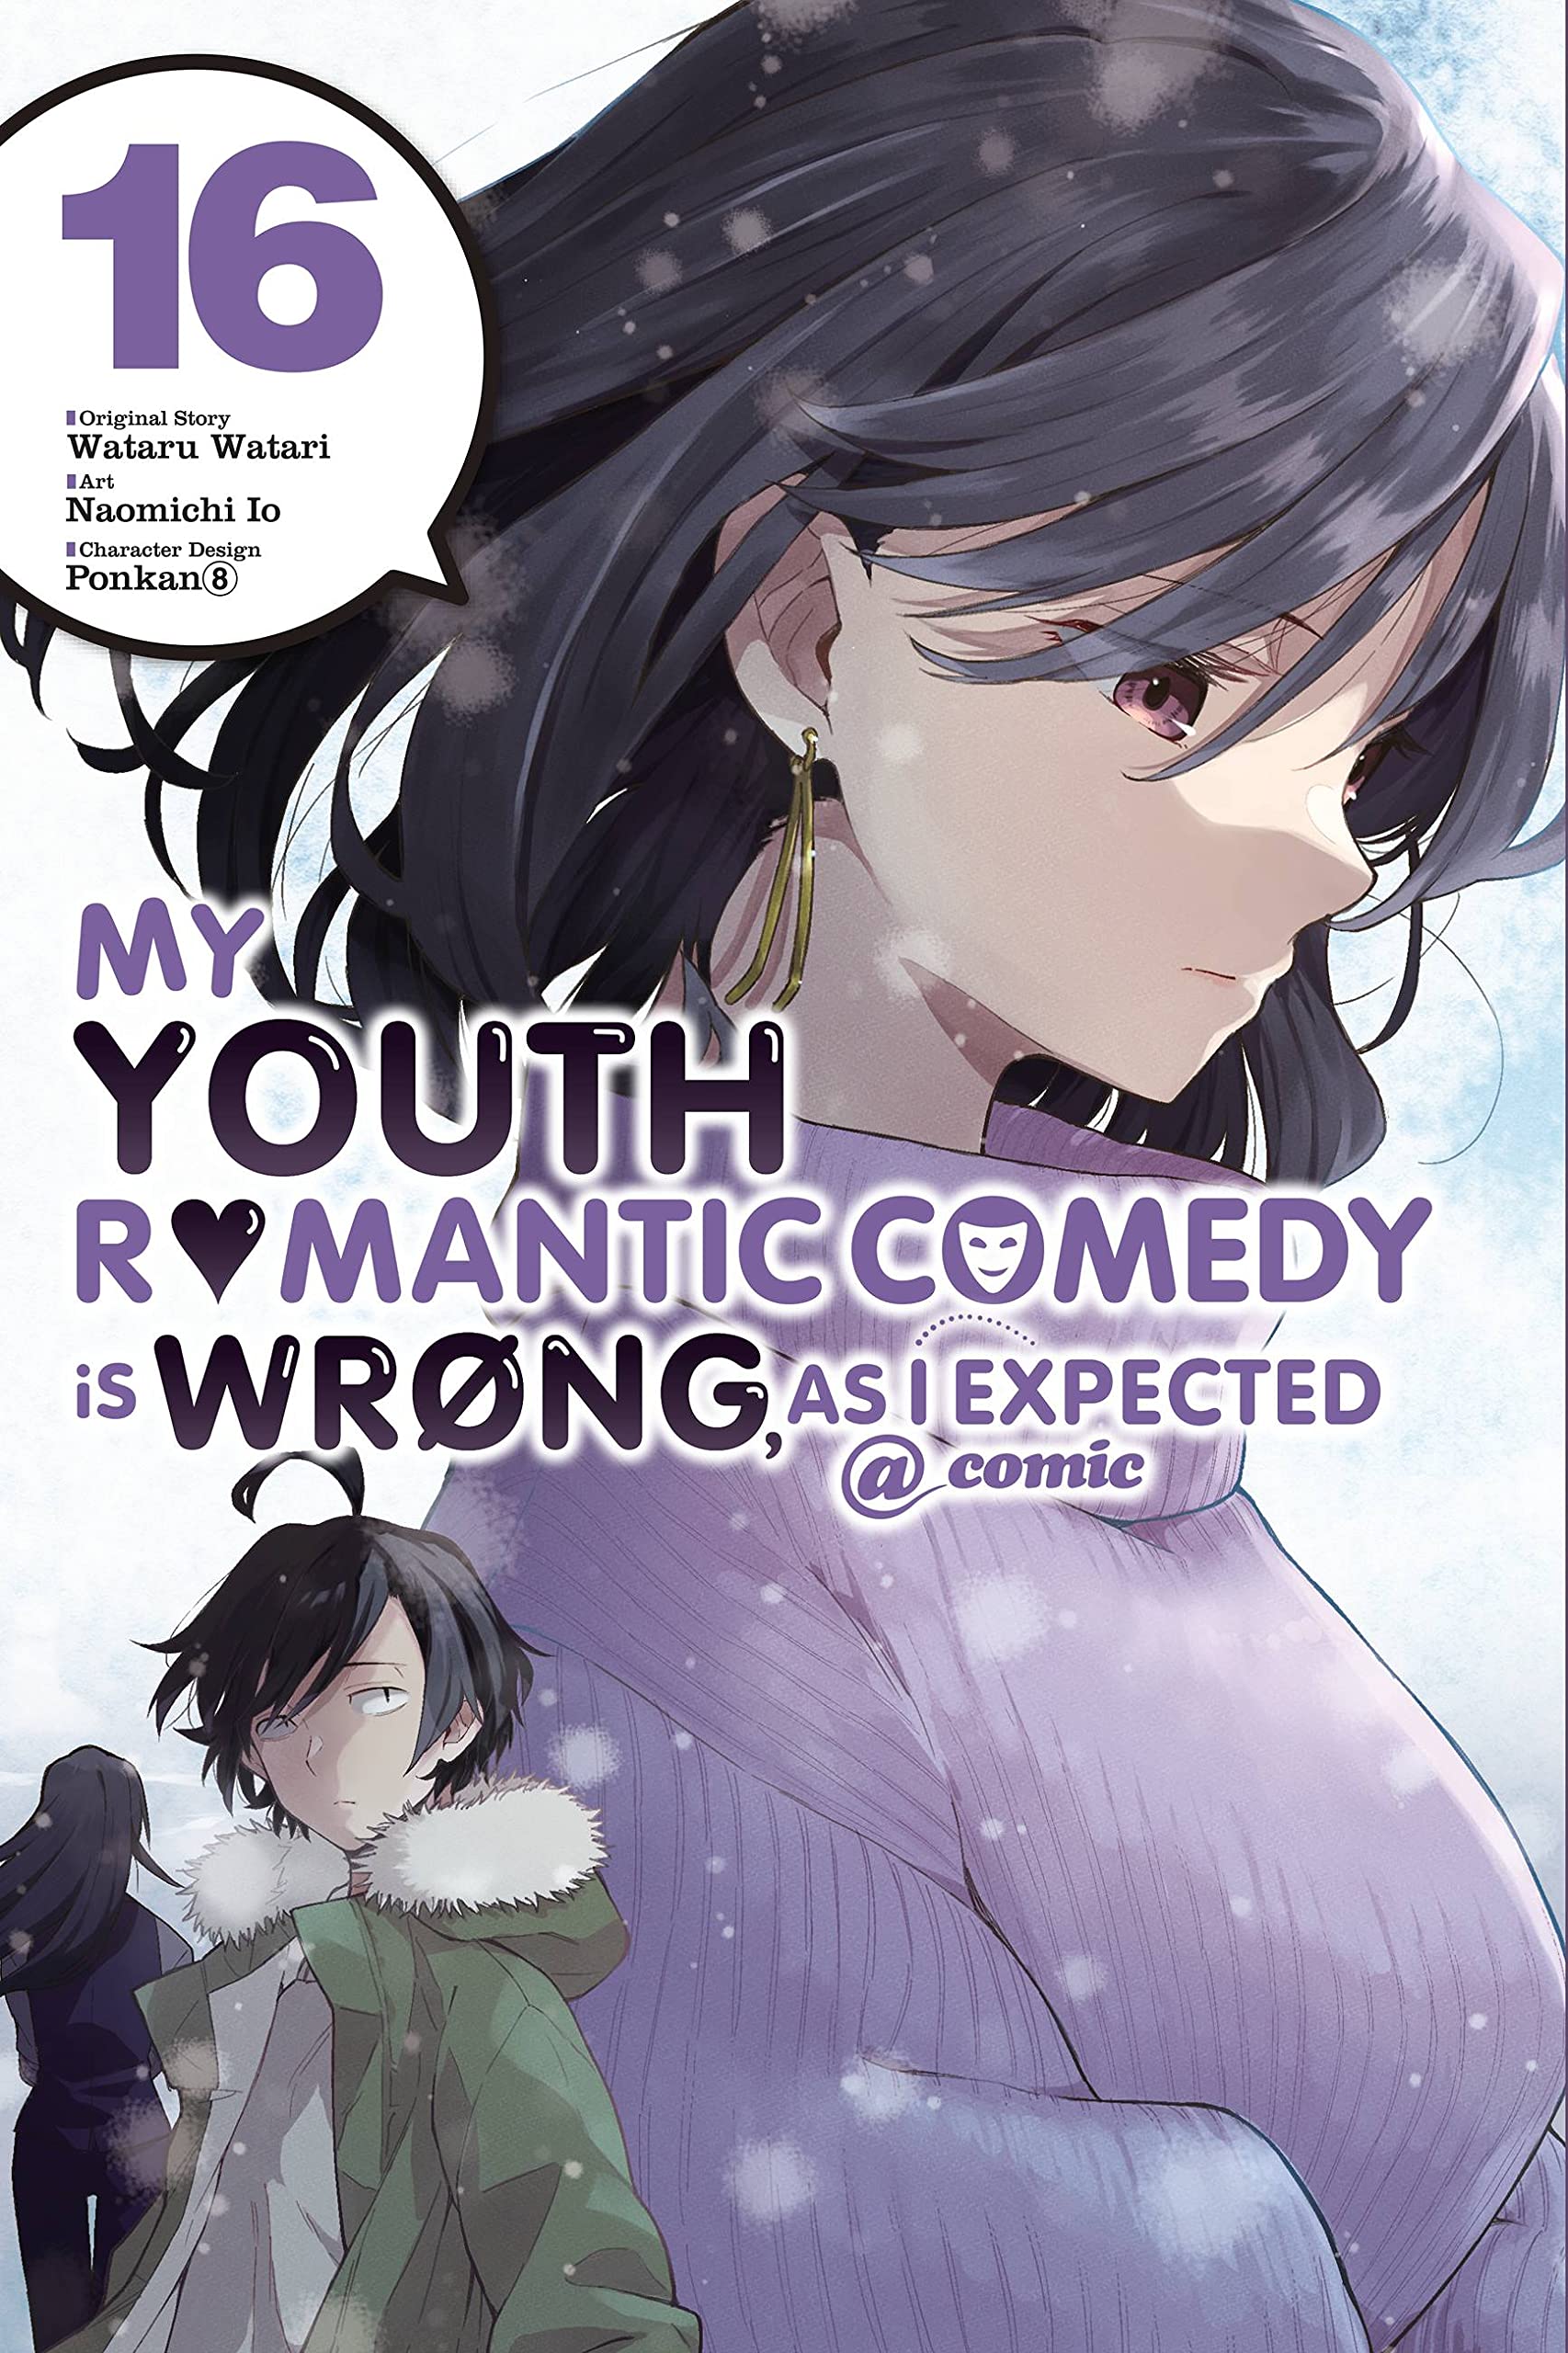 My Youth Romantic Comedy Is Wrong, As I Expected @ comic, Vol. 16 by Ponkan 8, Naomichi Io, Wataru Watari